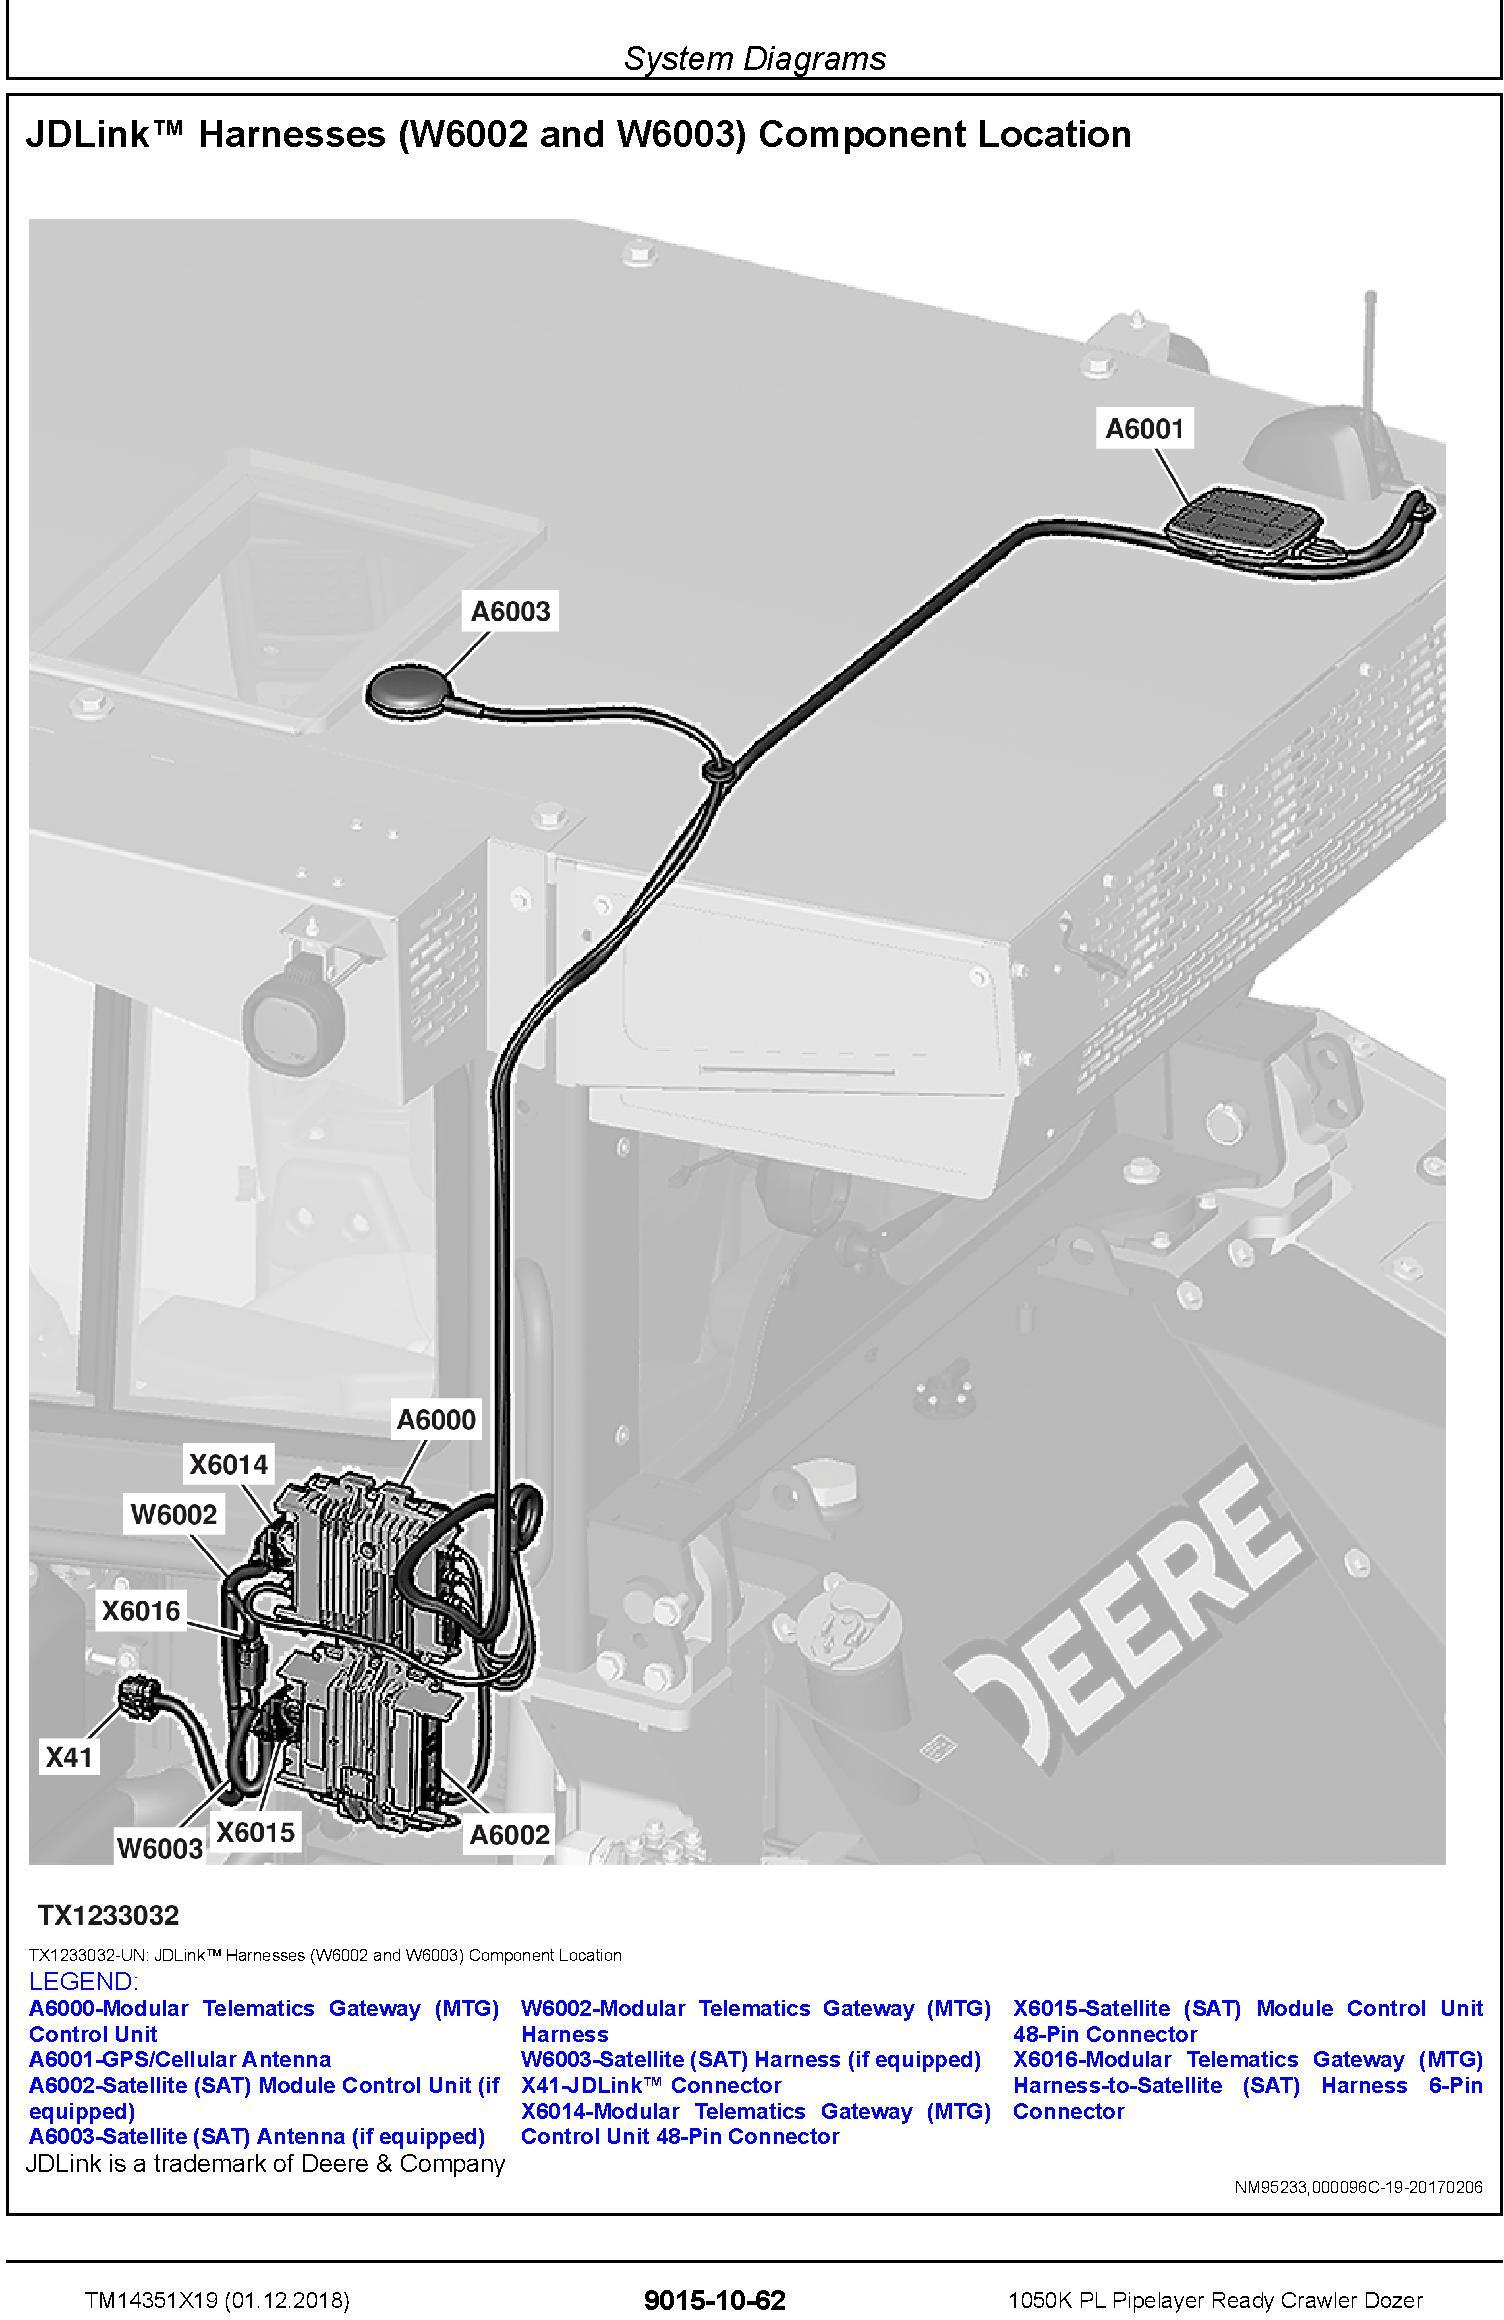 John Deere 1050K PL (SN. F318802-) Pipelayer Ready Crawler Dozer Diagnostic Manual (TM14351X19) - 2